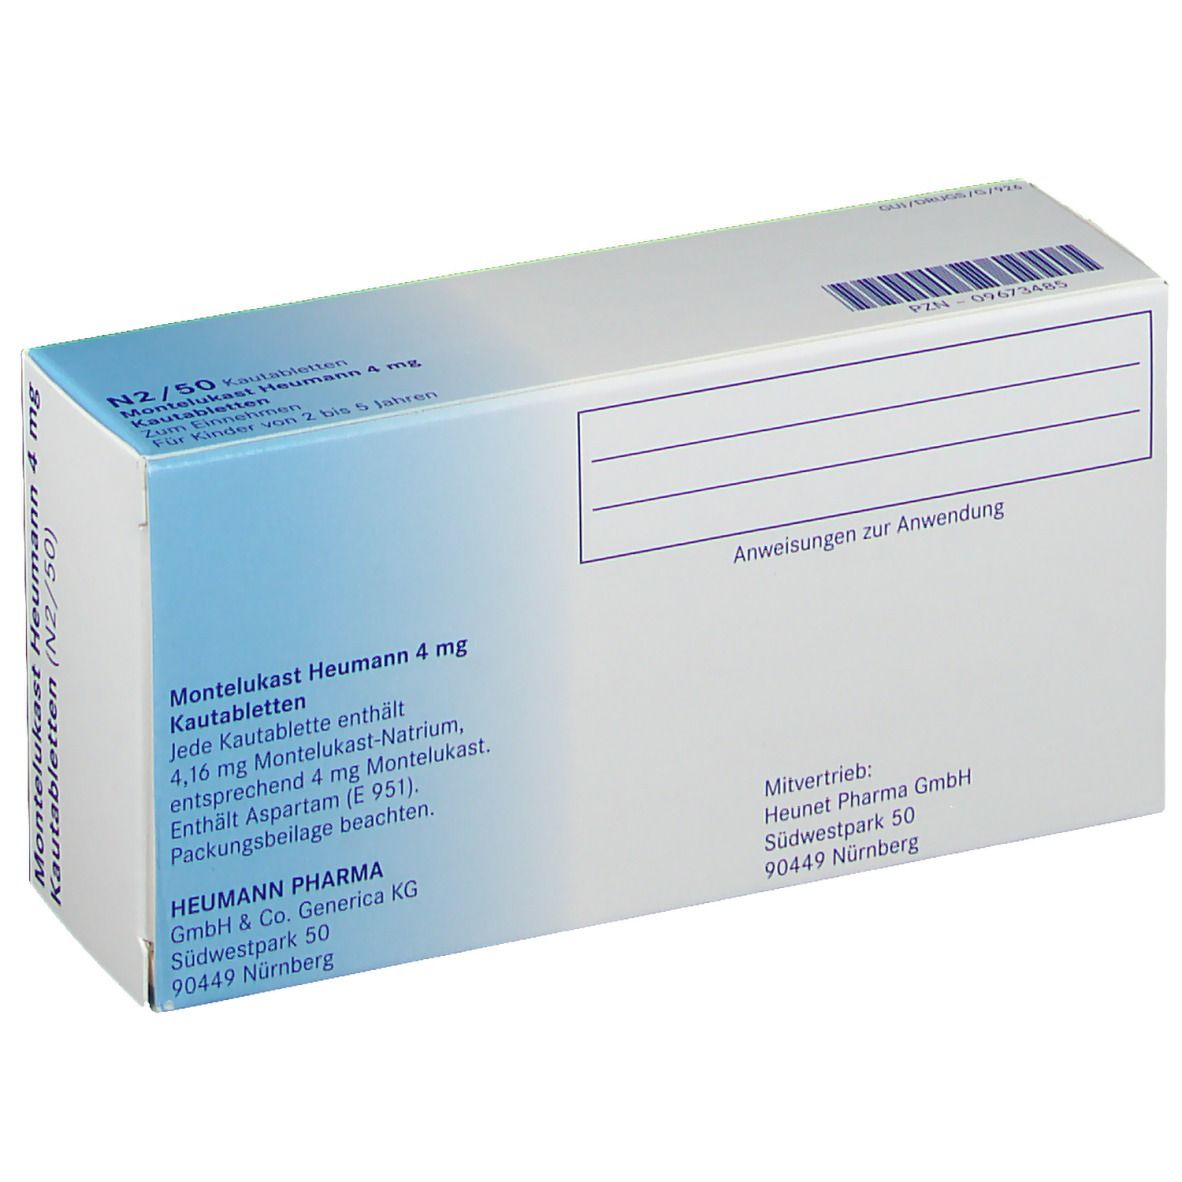 Montelukast Heumann 4 mg